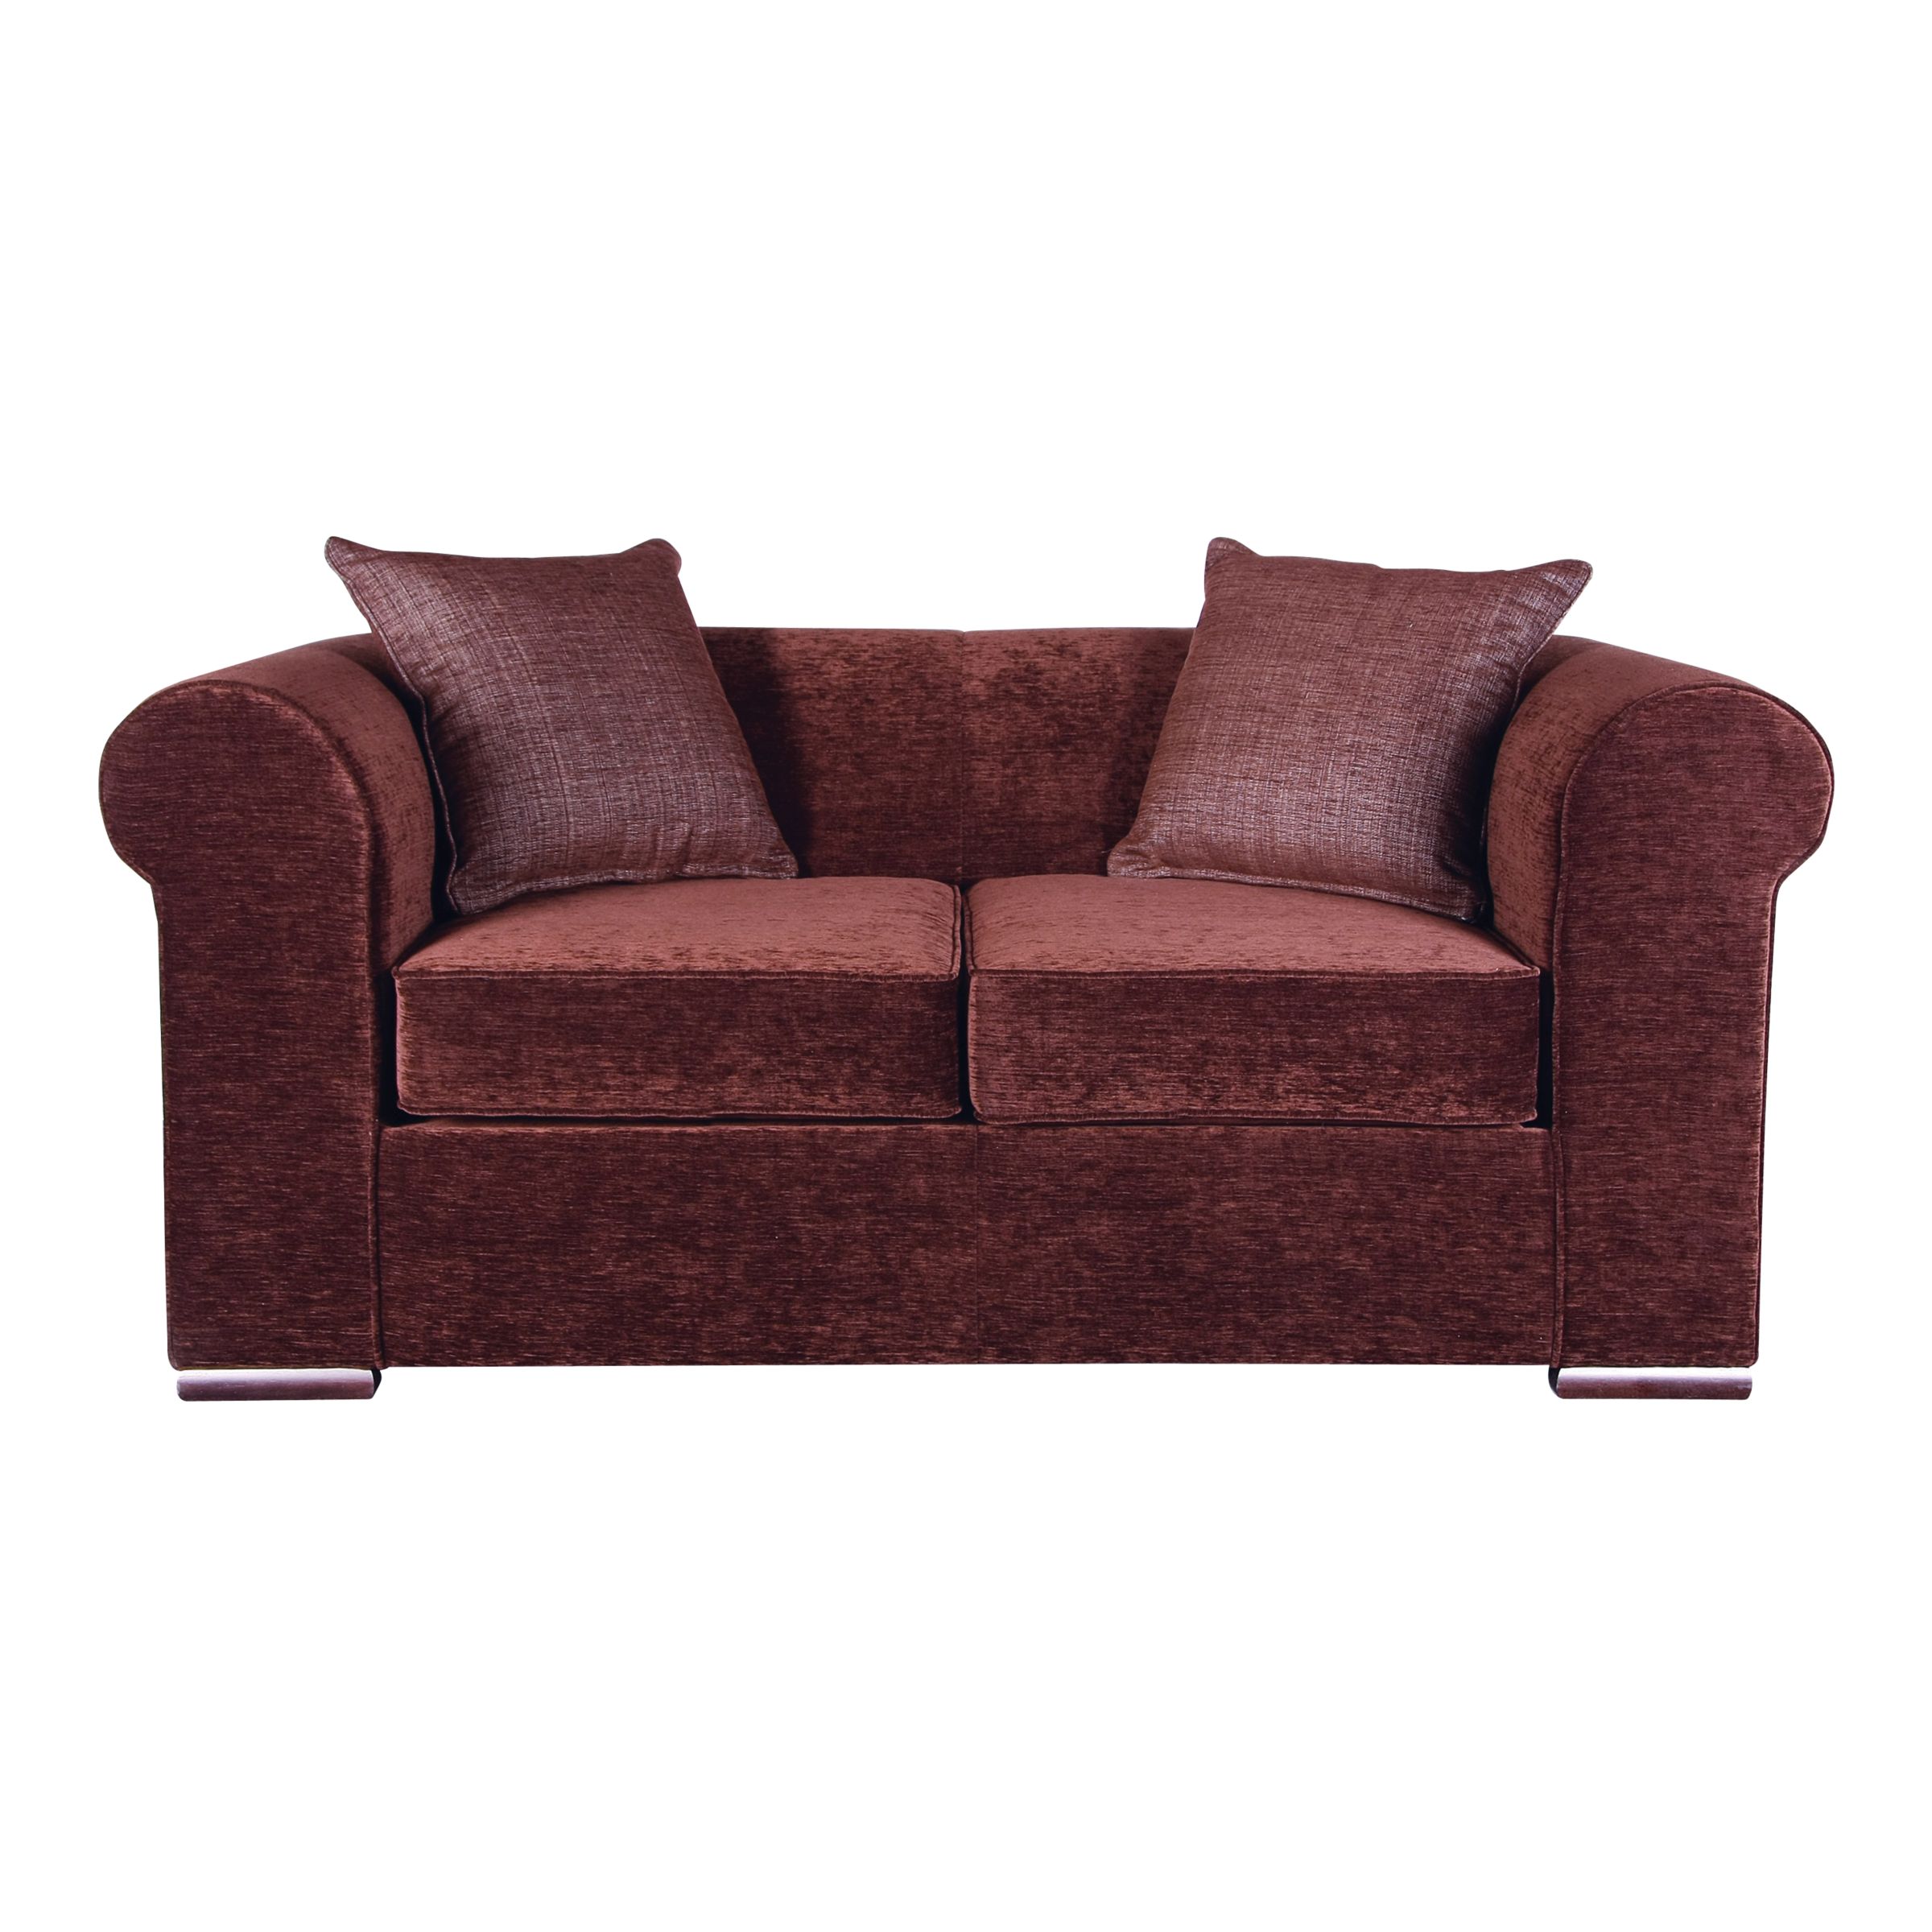 Chilton Medium Sofa Bed with Sprung